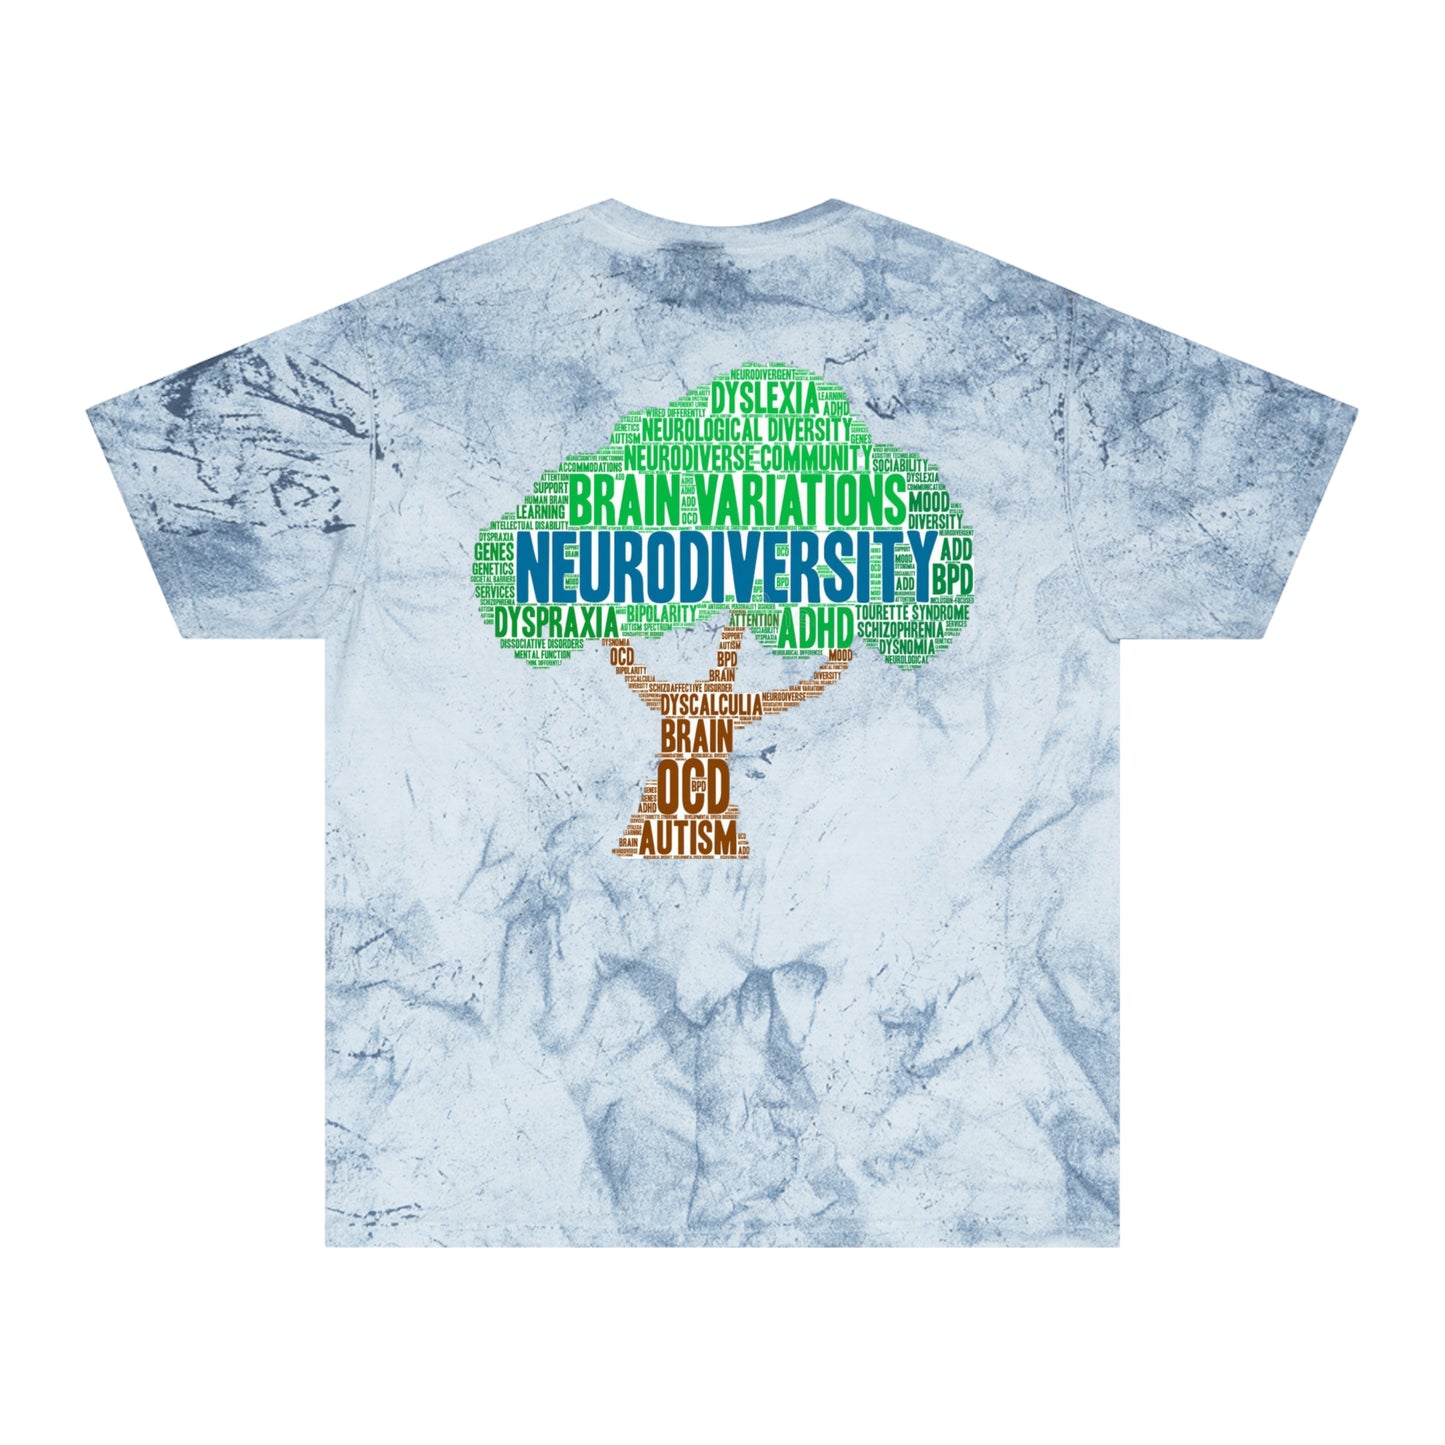 Neurodiversity Advocate and Awareness Shirt